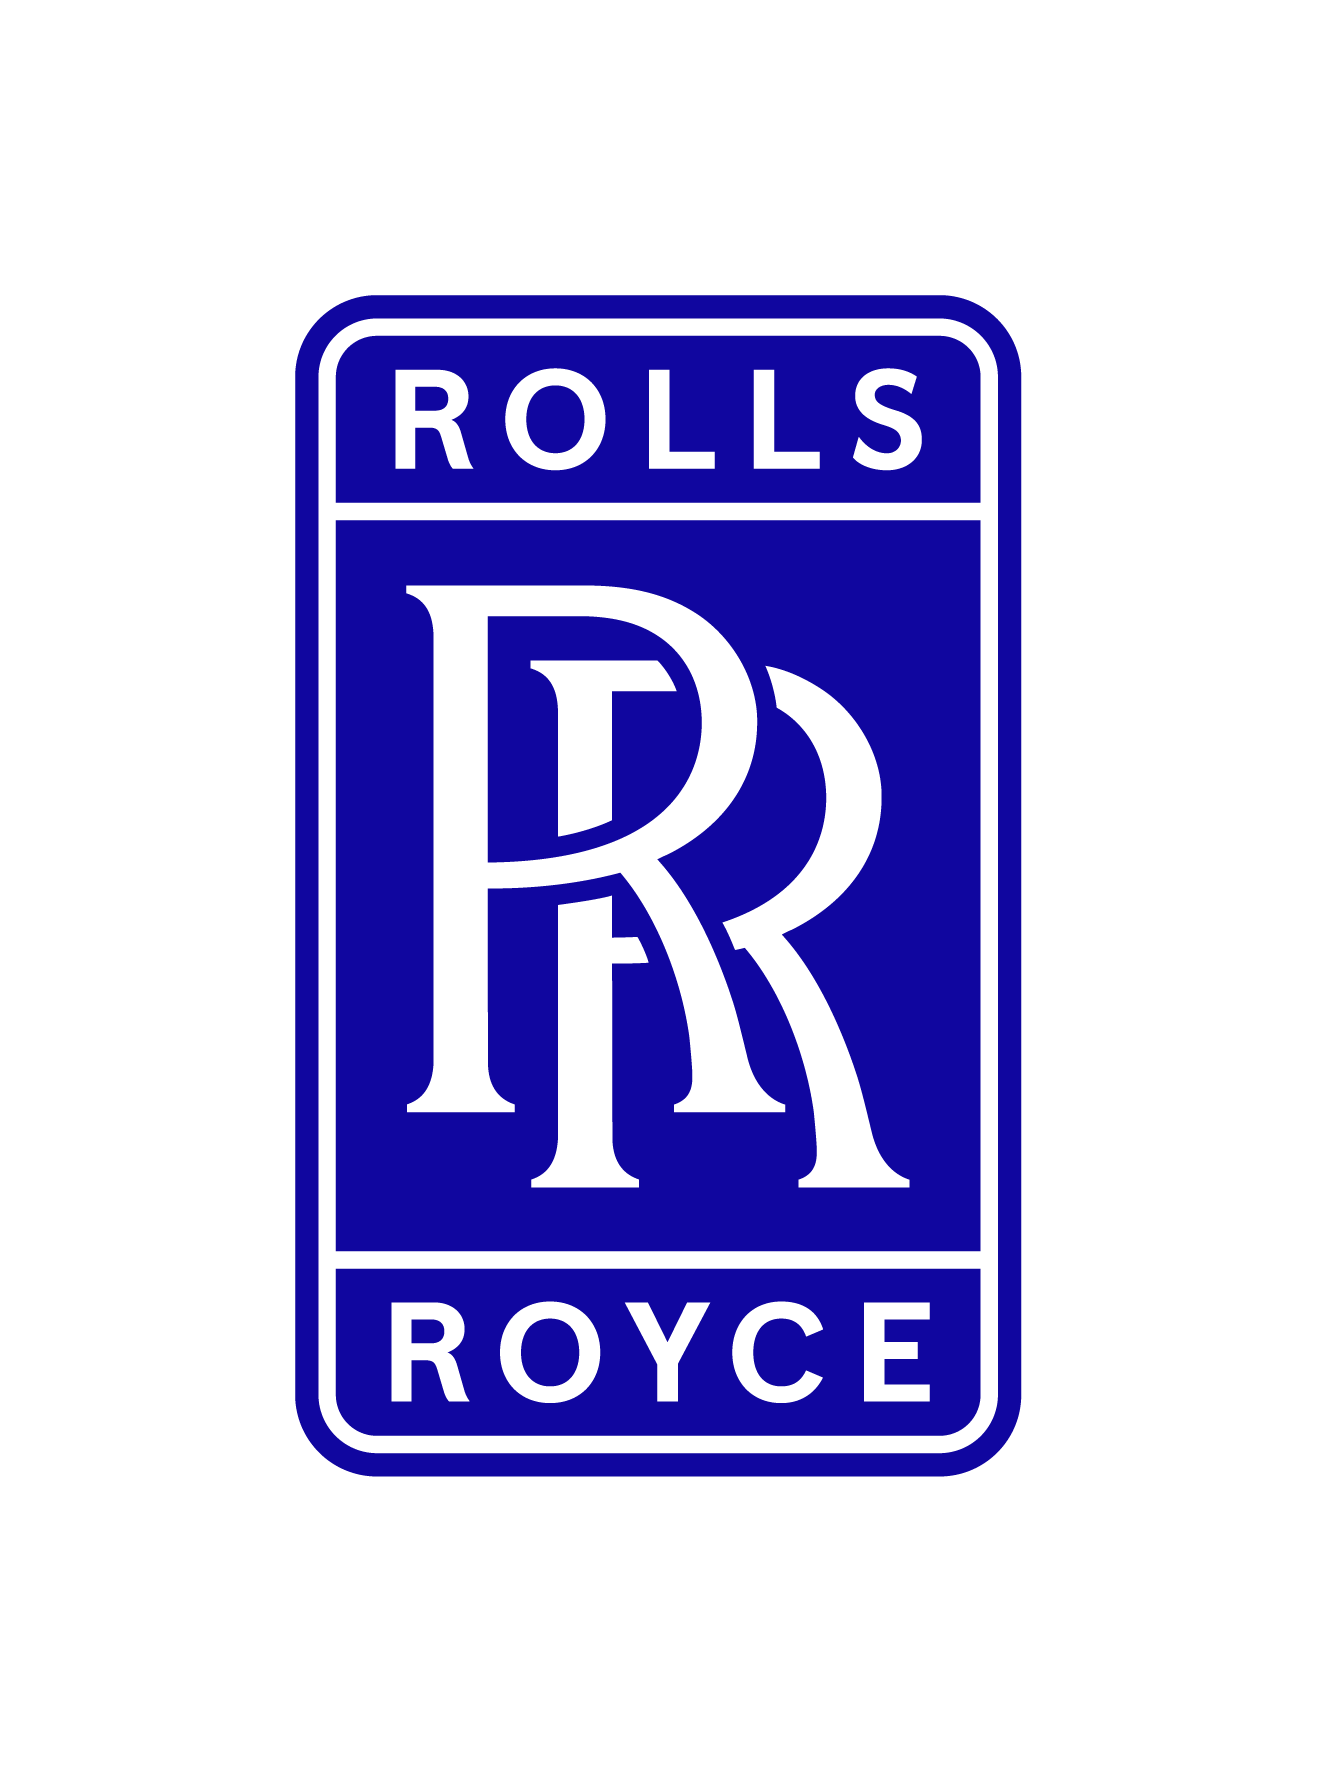 Rolls Royce eBadge 2022